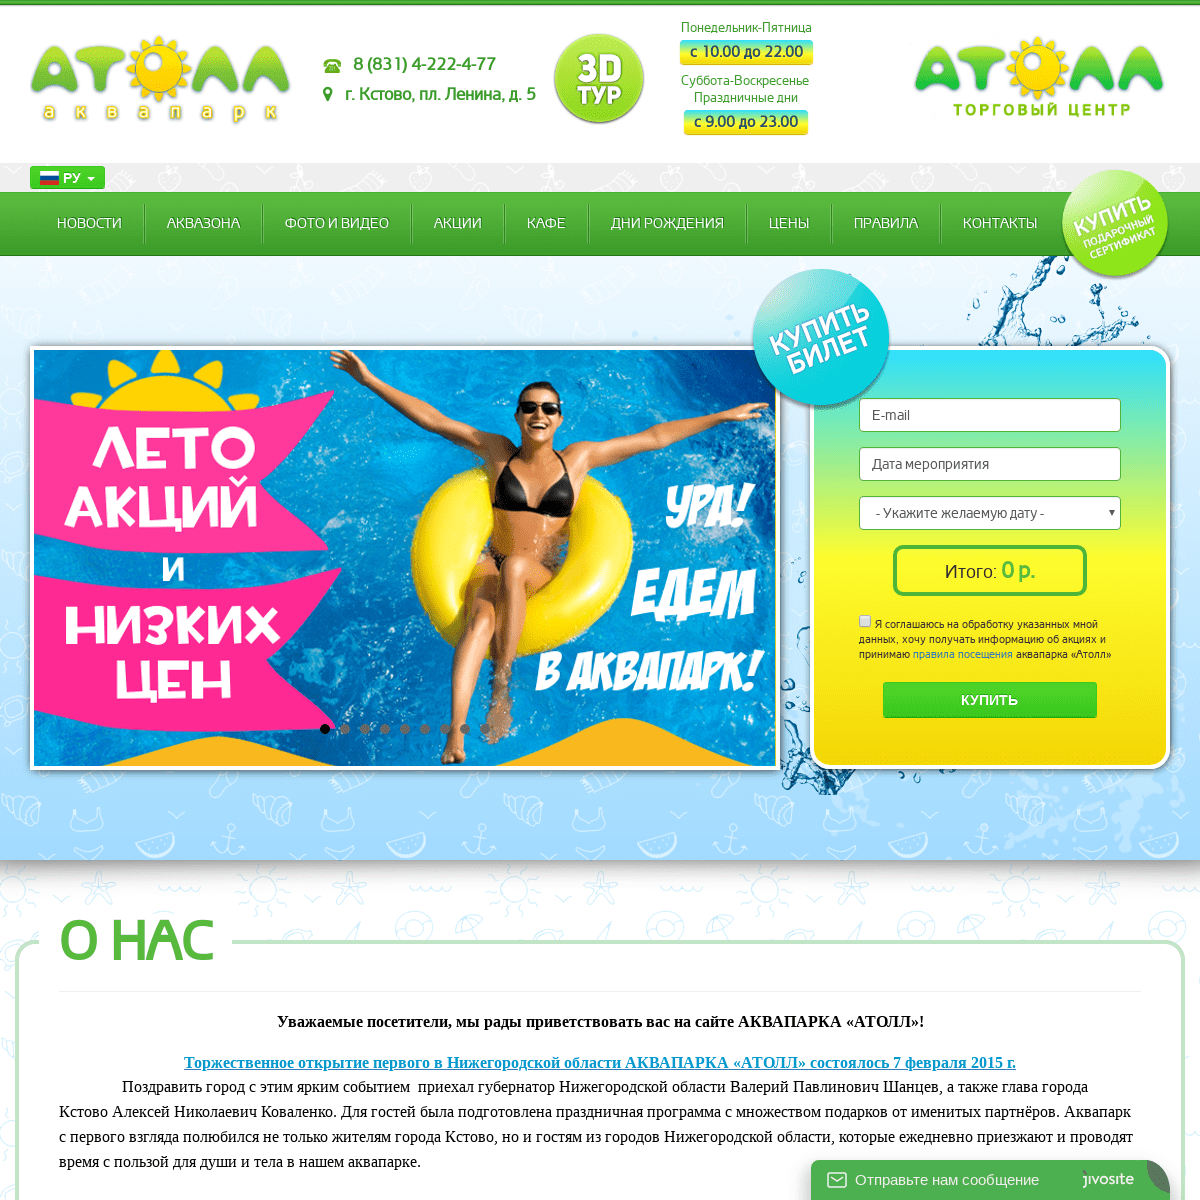 A complete backup of aqvaparkatoll.ru